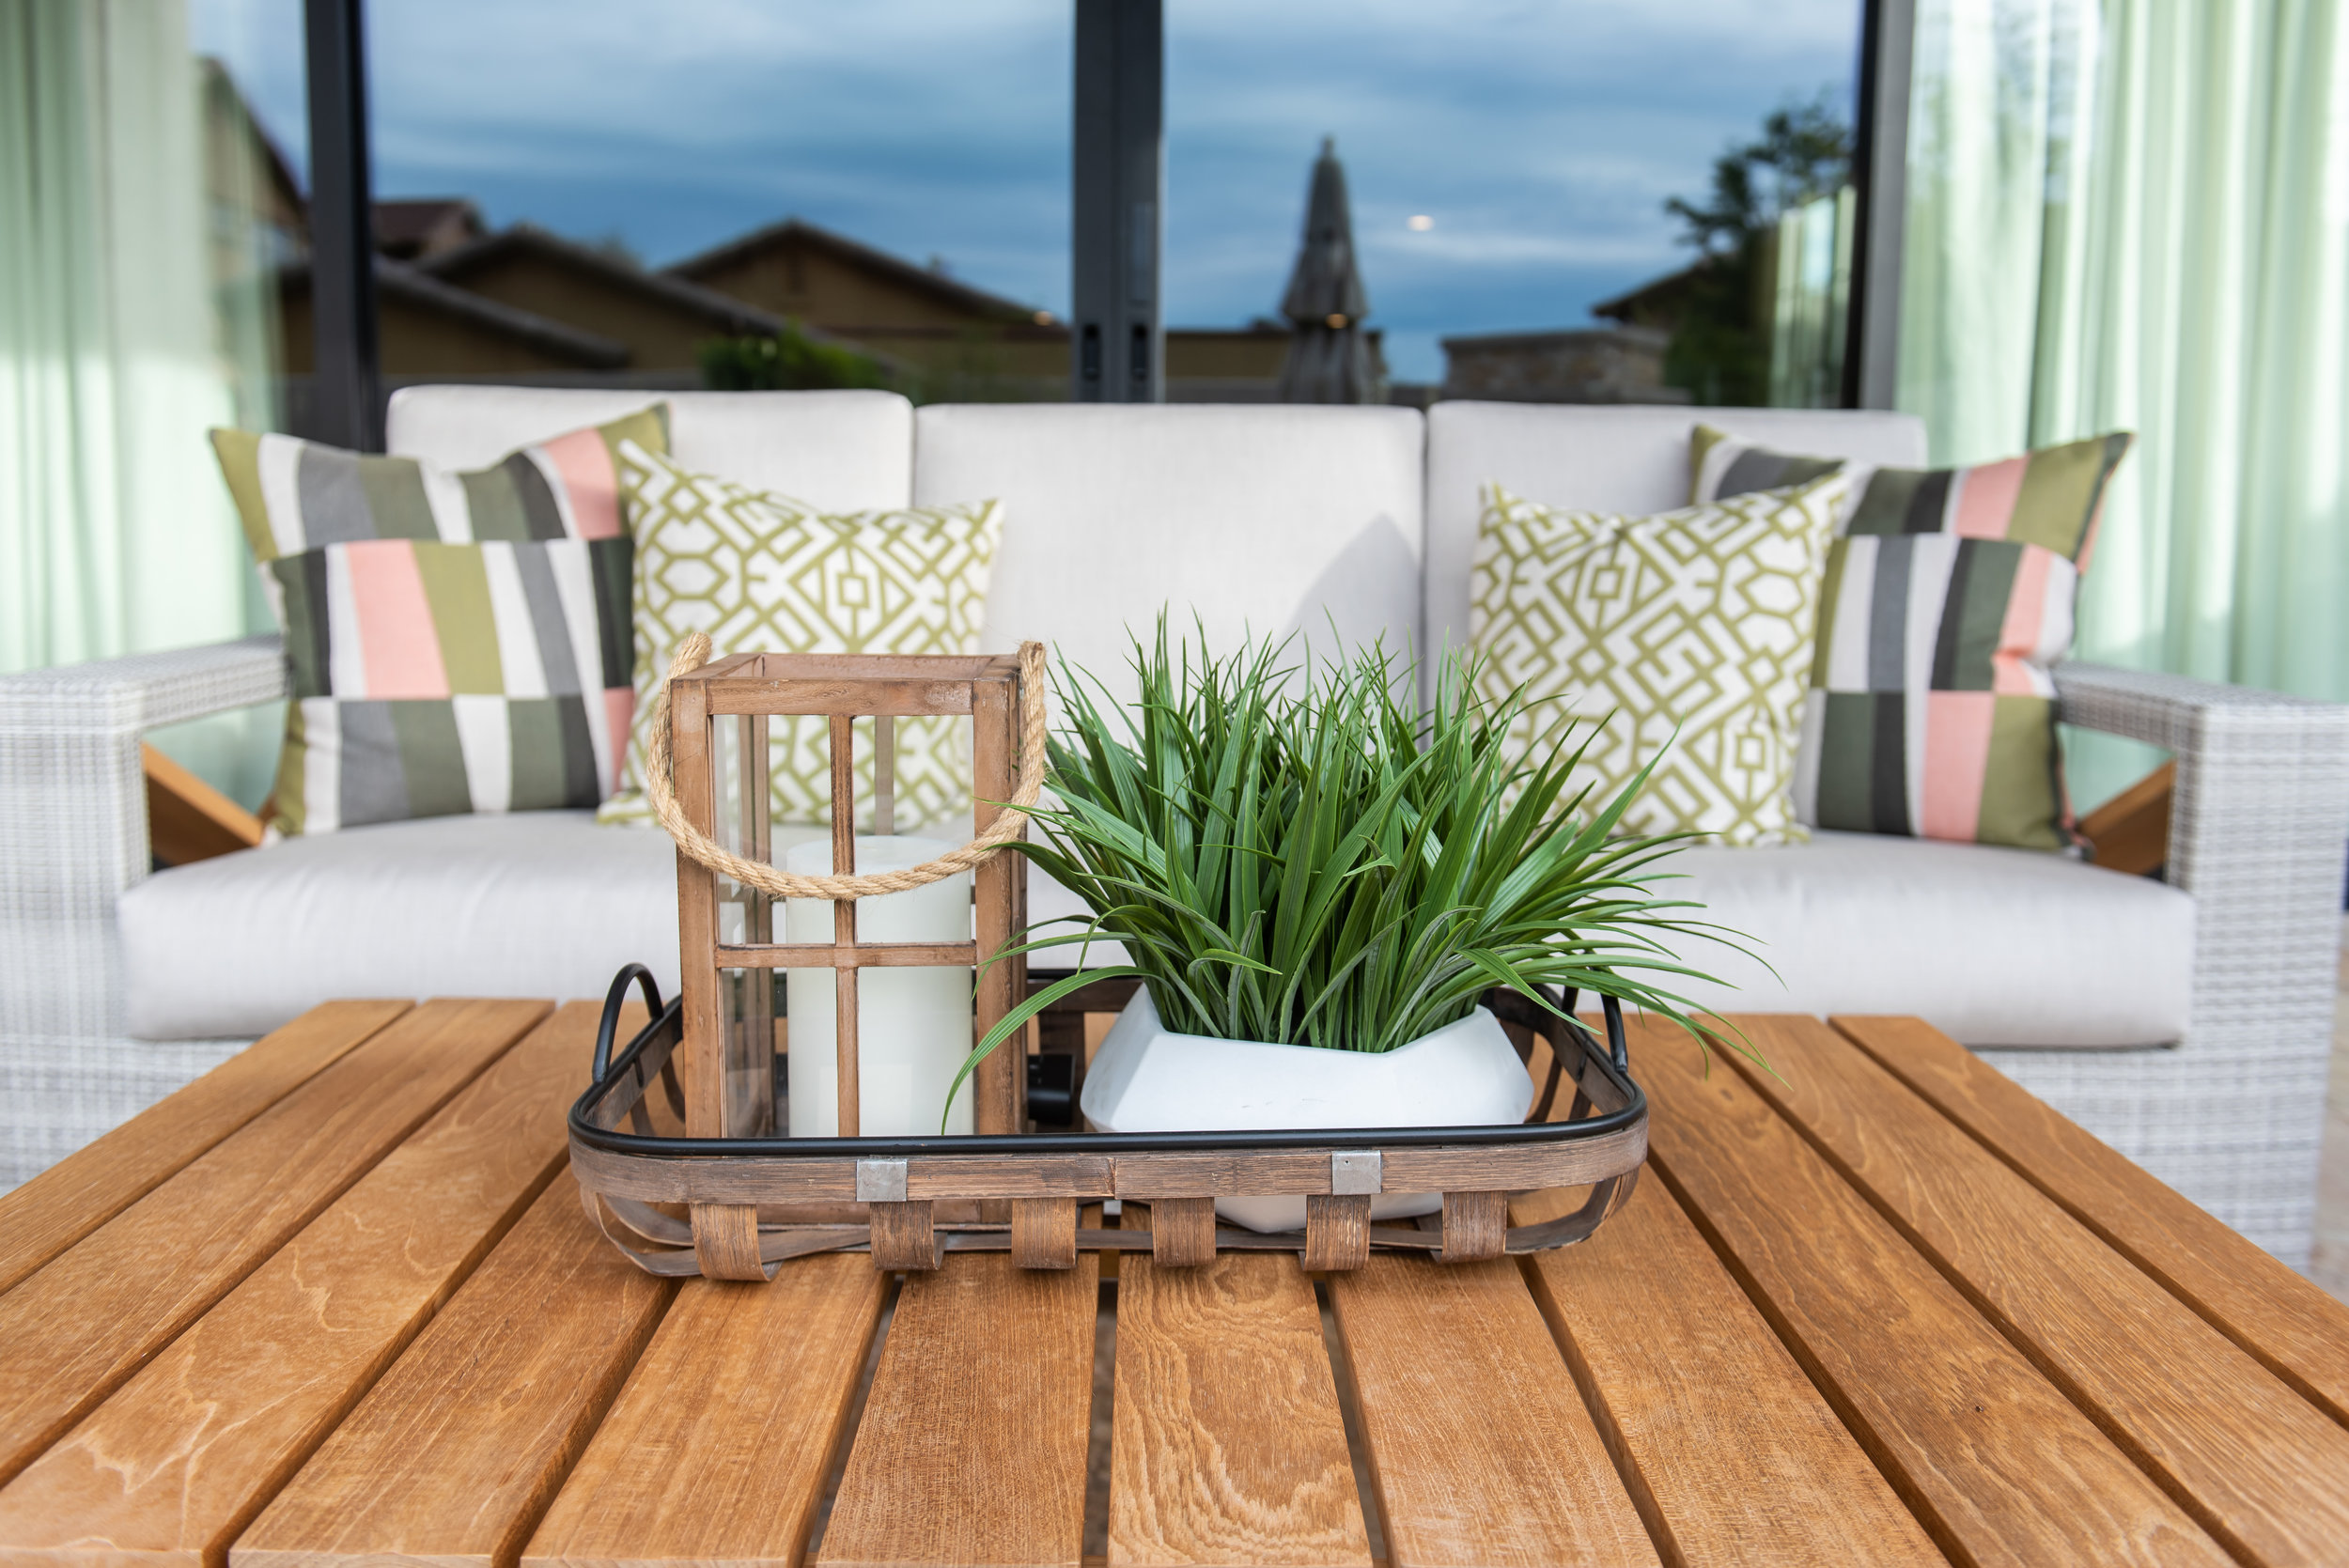 Backyard +patio +outdoor +furniture +pillows +coffeetable +plant.jpg